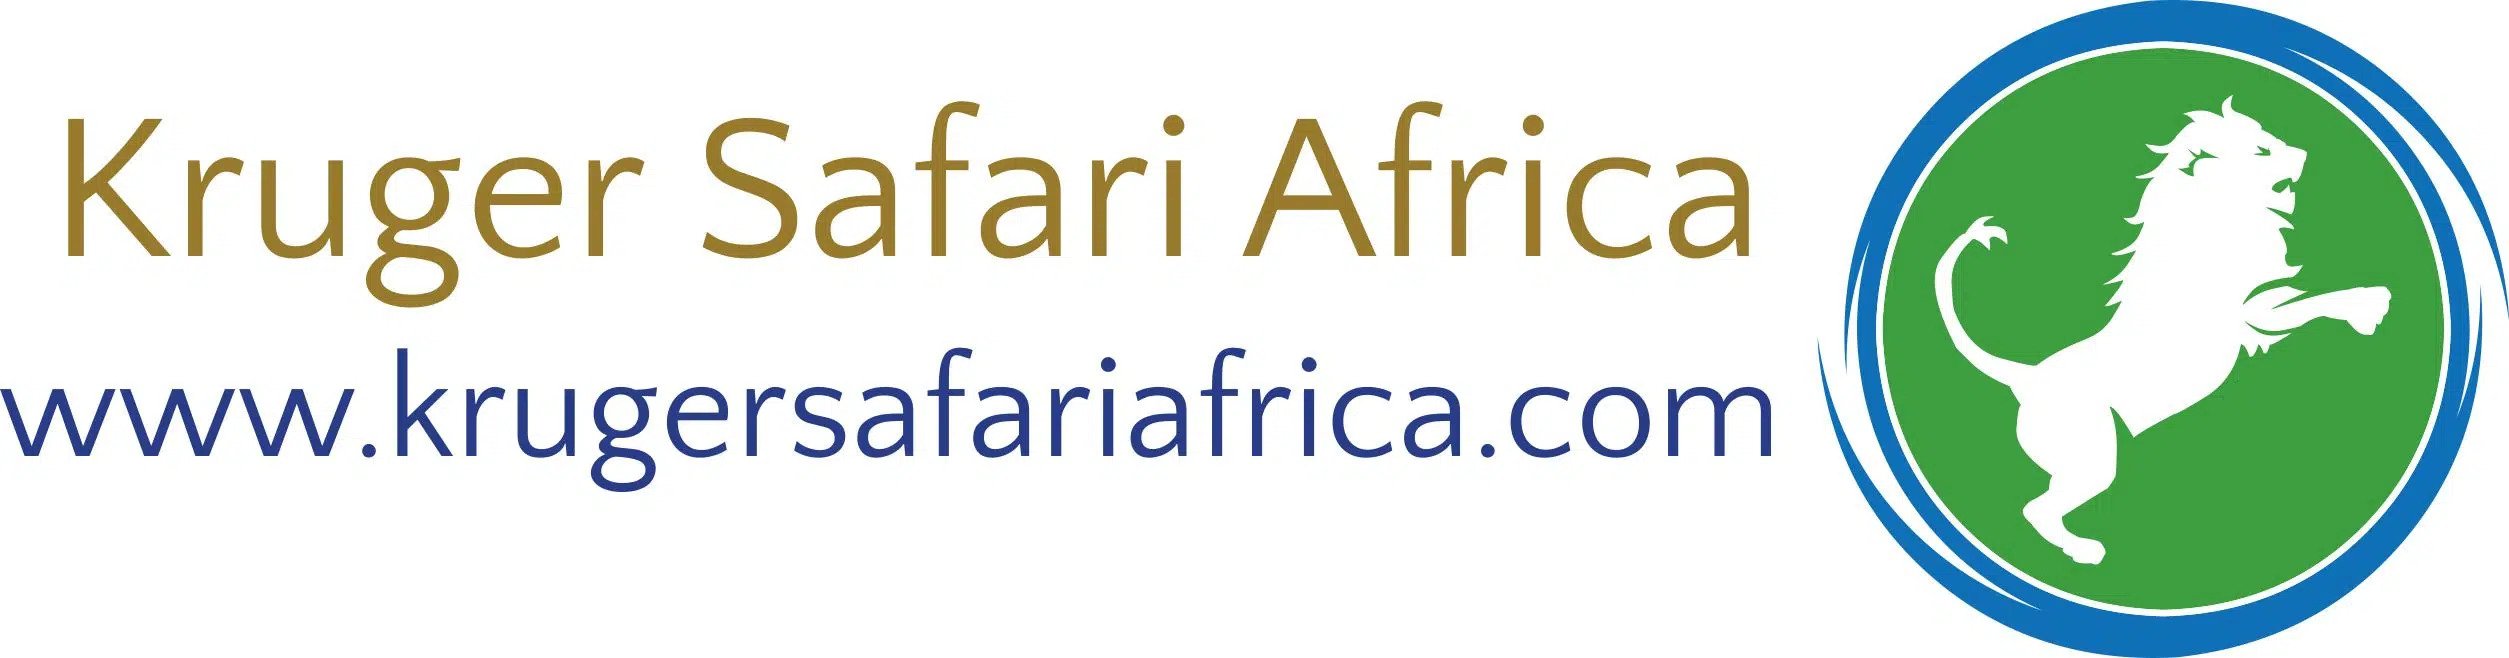 Kruger Safari Africa logo